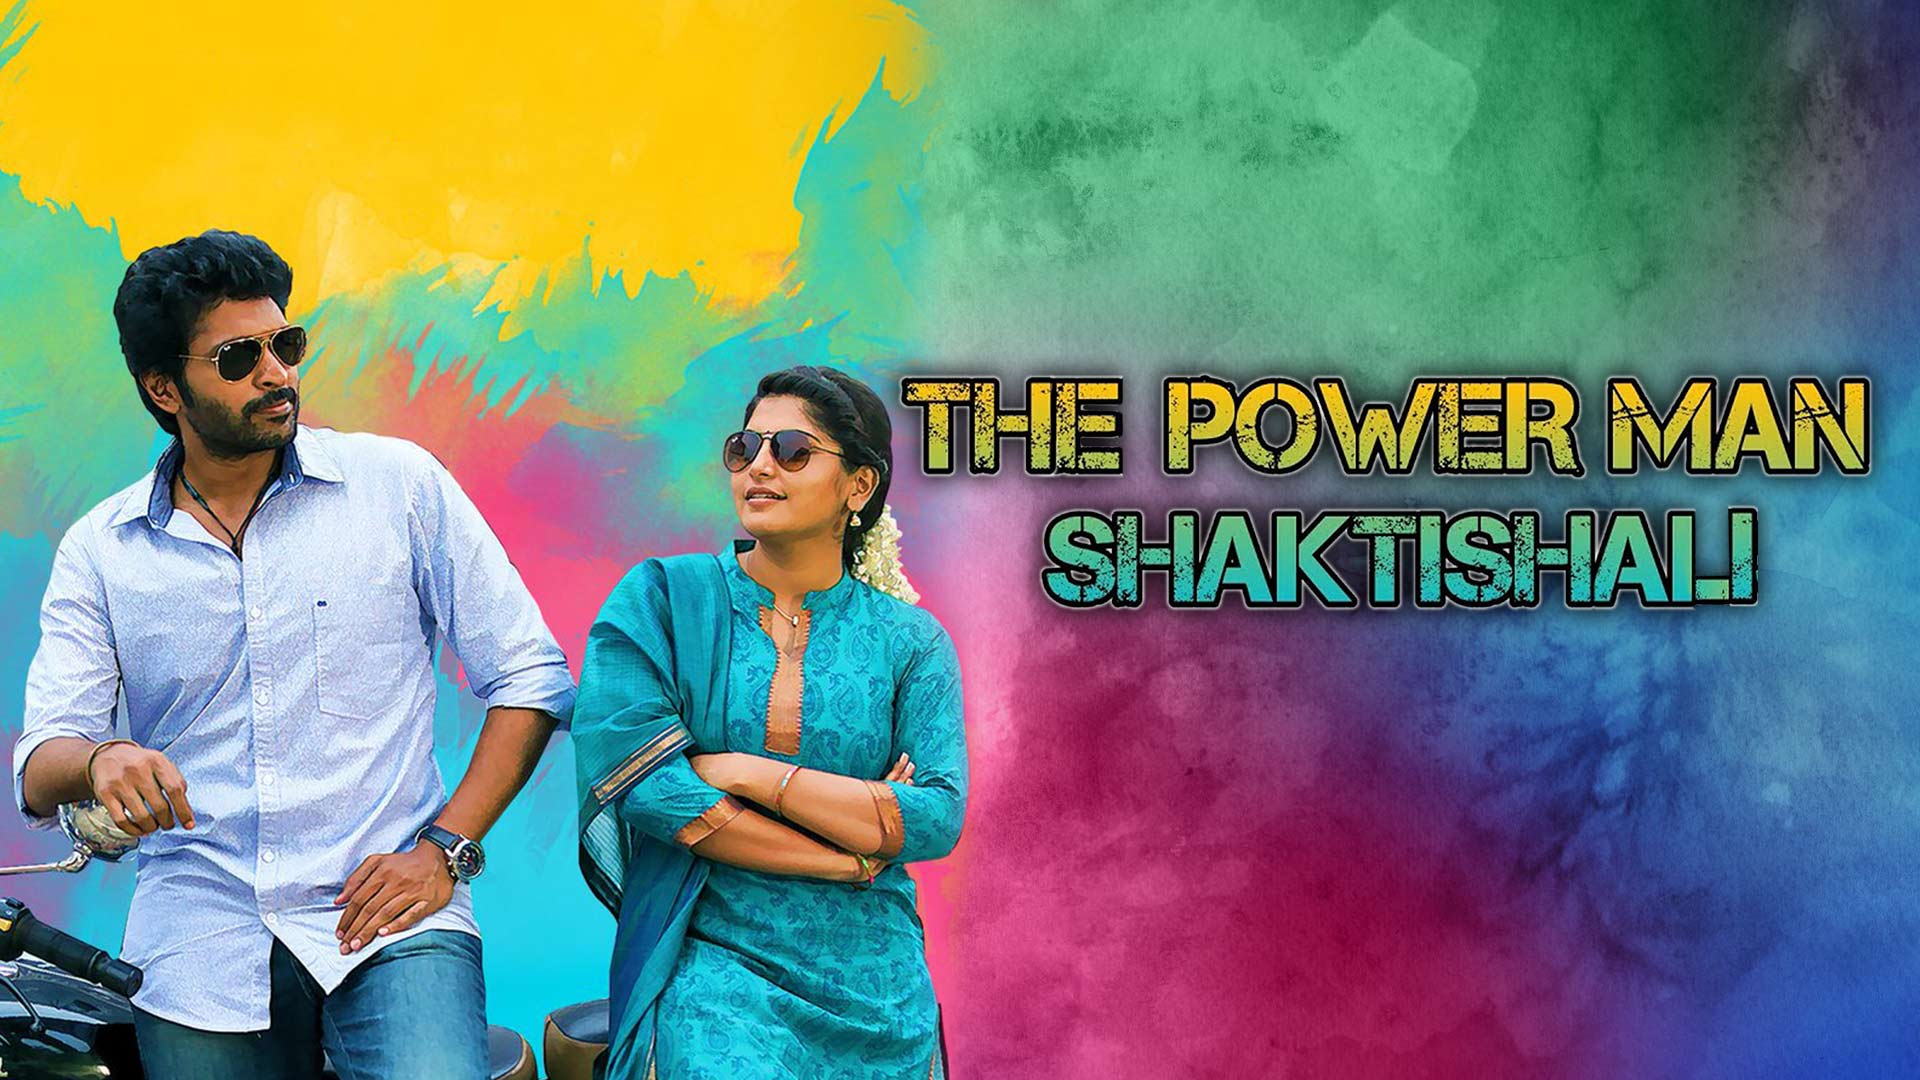 The Powerman Shaktishaali